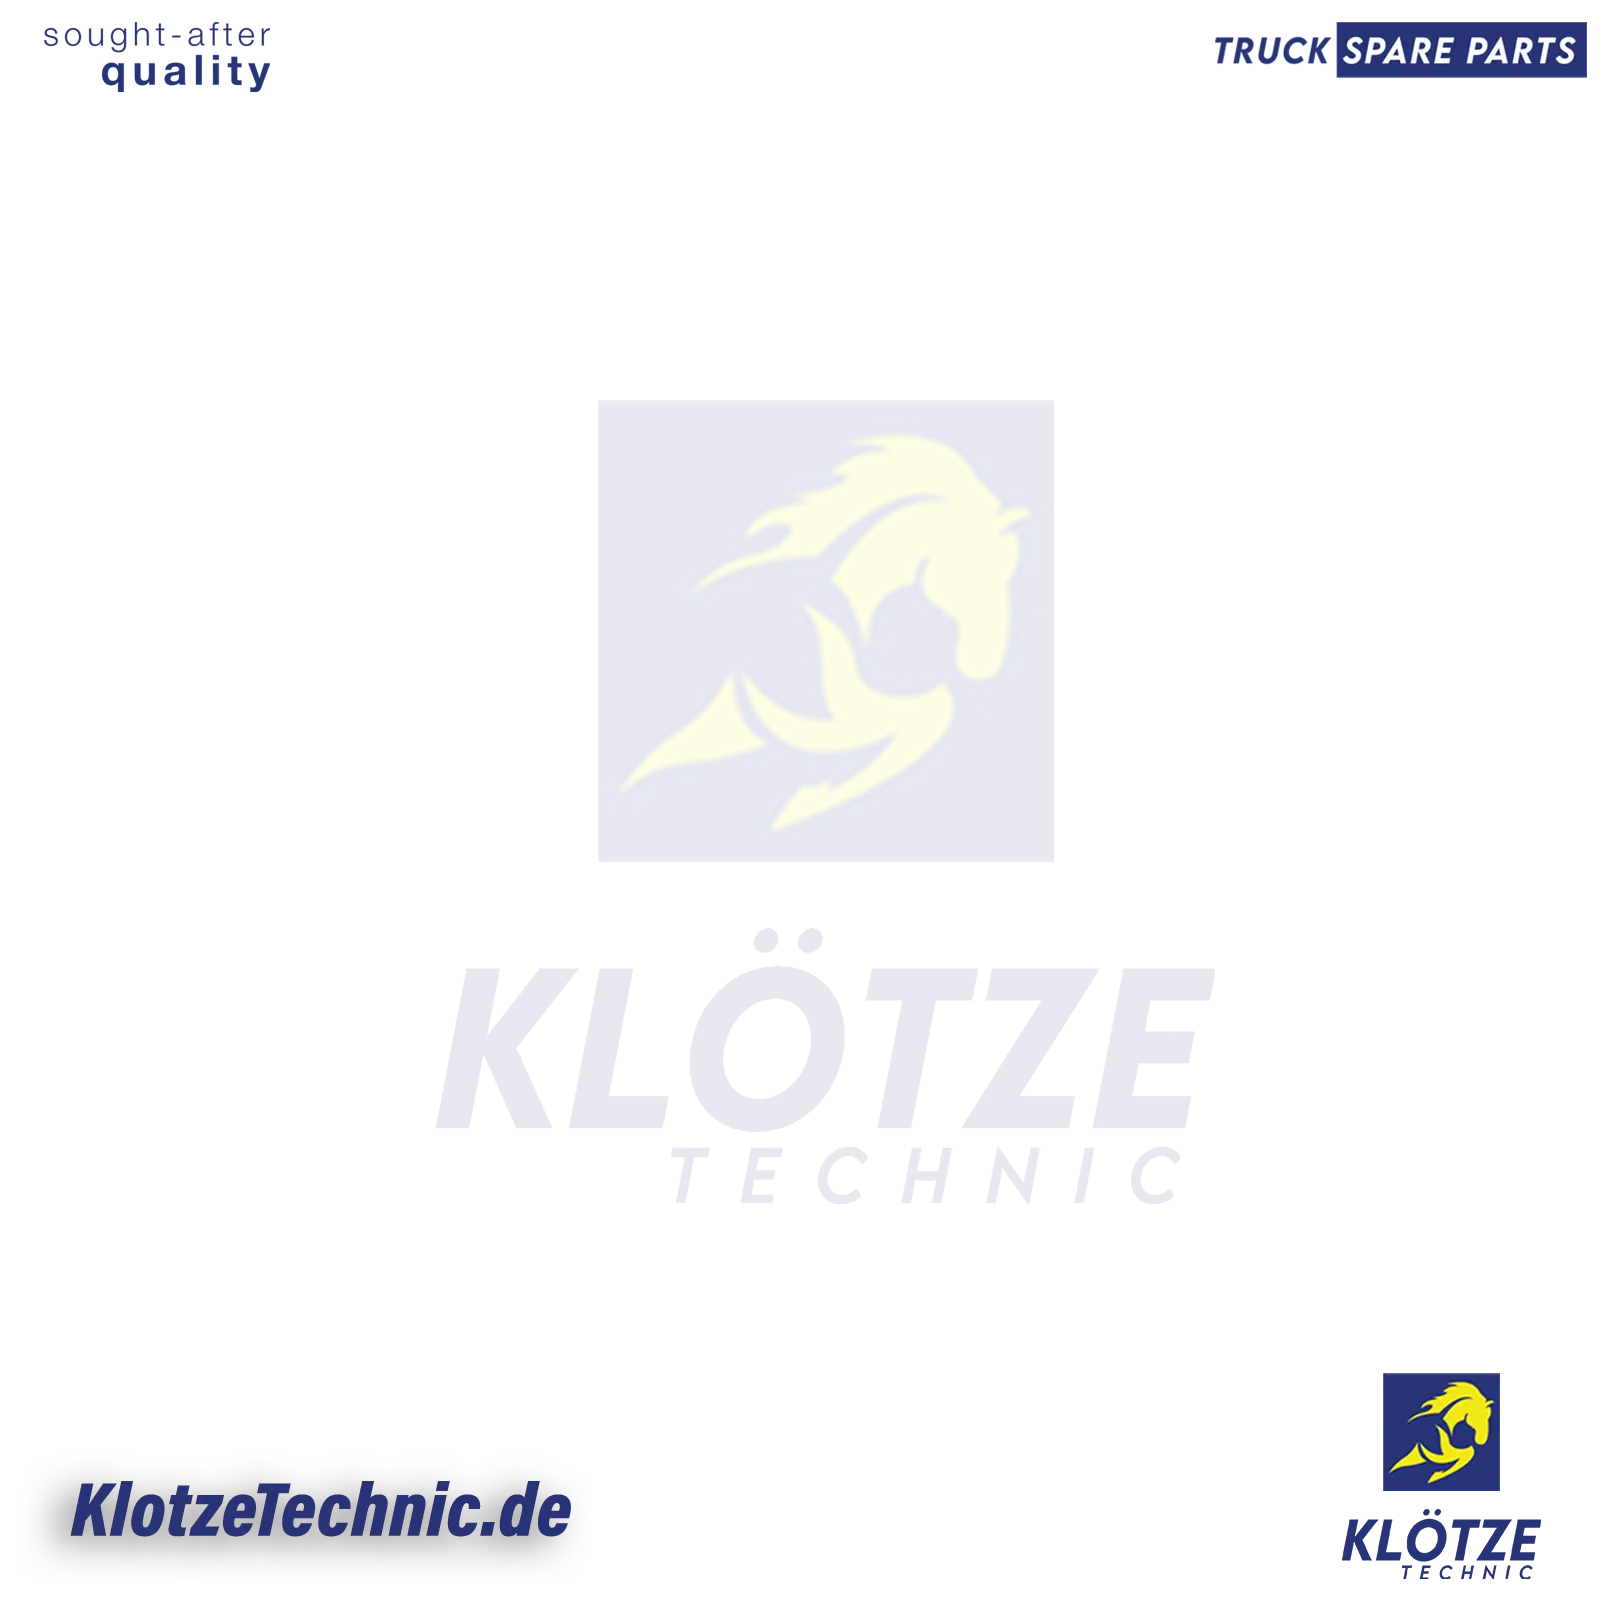 Battery main relay, 20585989, ZG20272-0008 || Klötze Technic